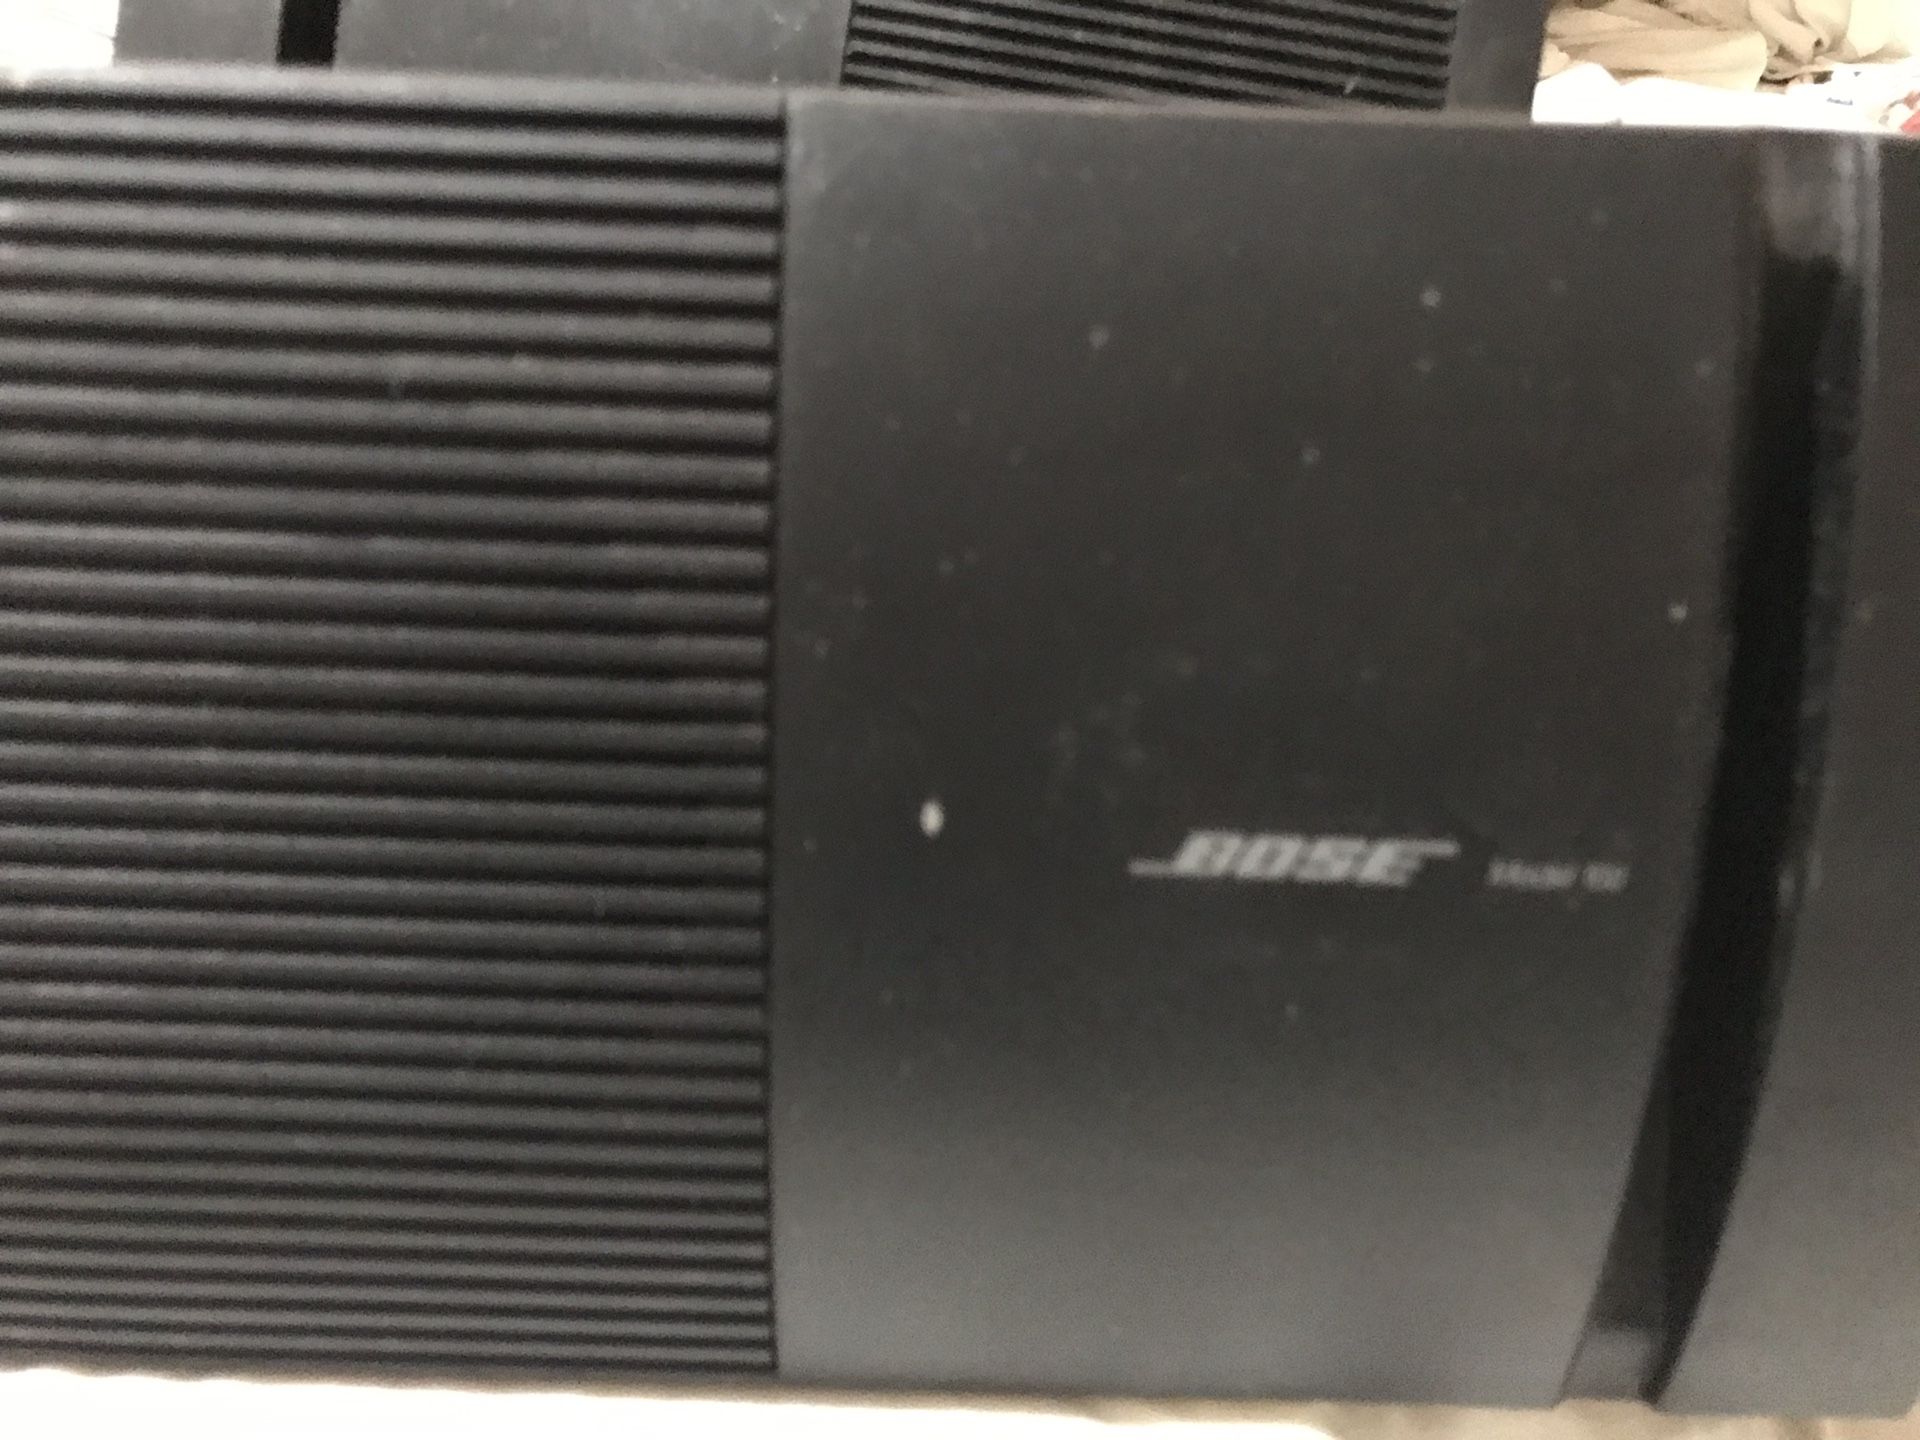 Bose bookshelf speakers